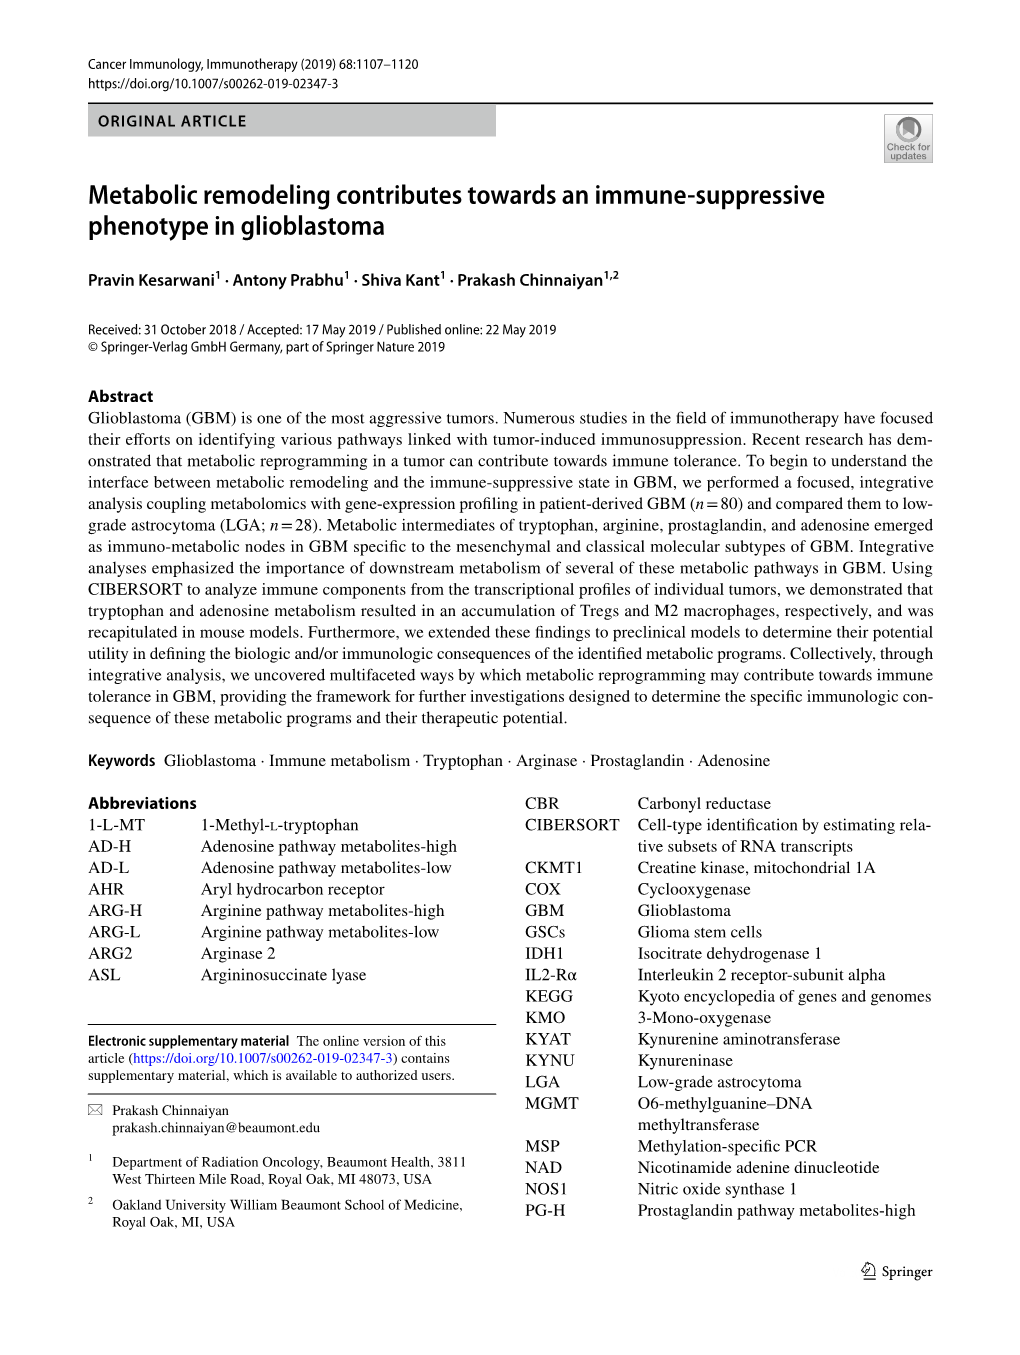 Metabolic Remodeling Contributes Towards an Immune-Suppressive Phenotype in Glioblastoma